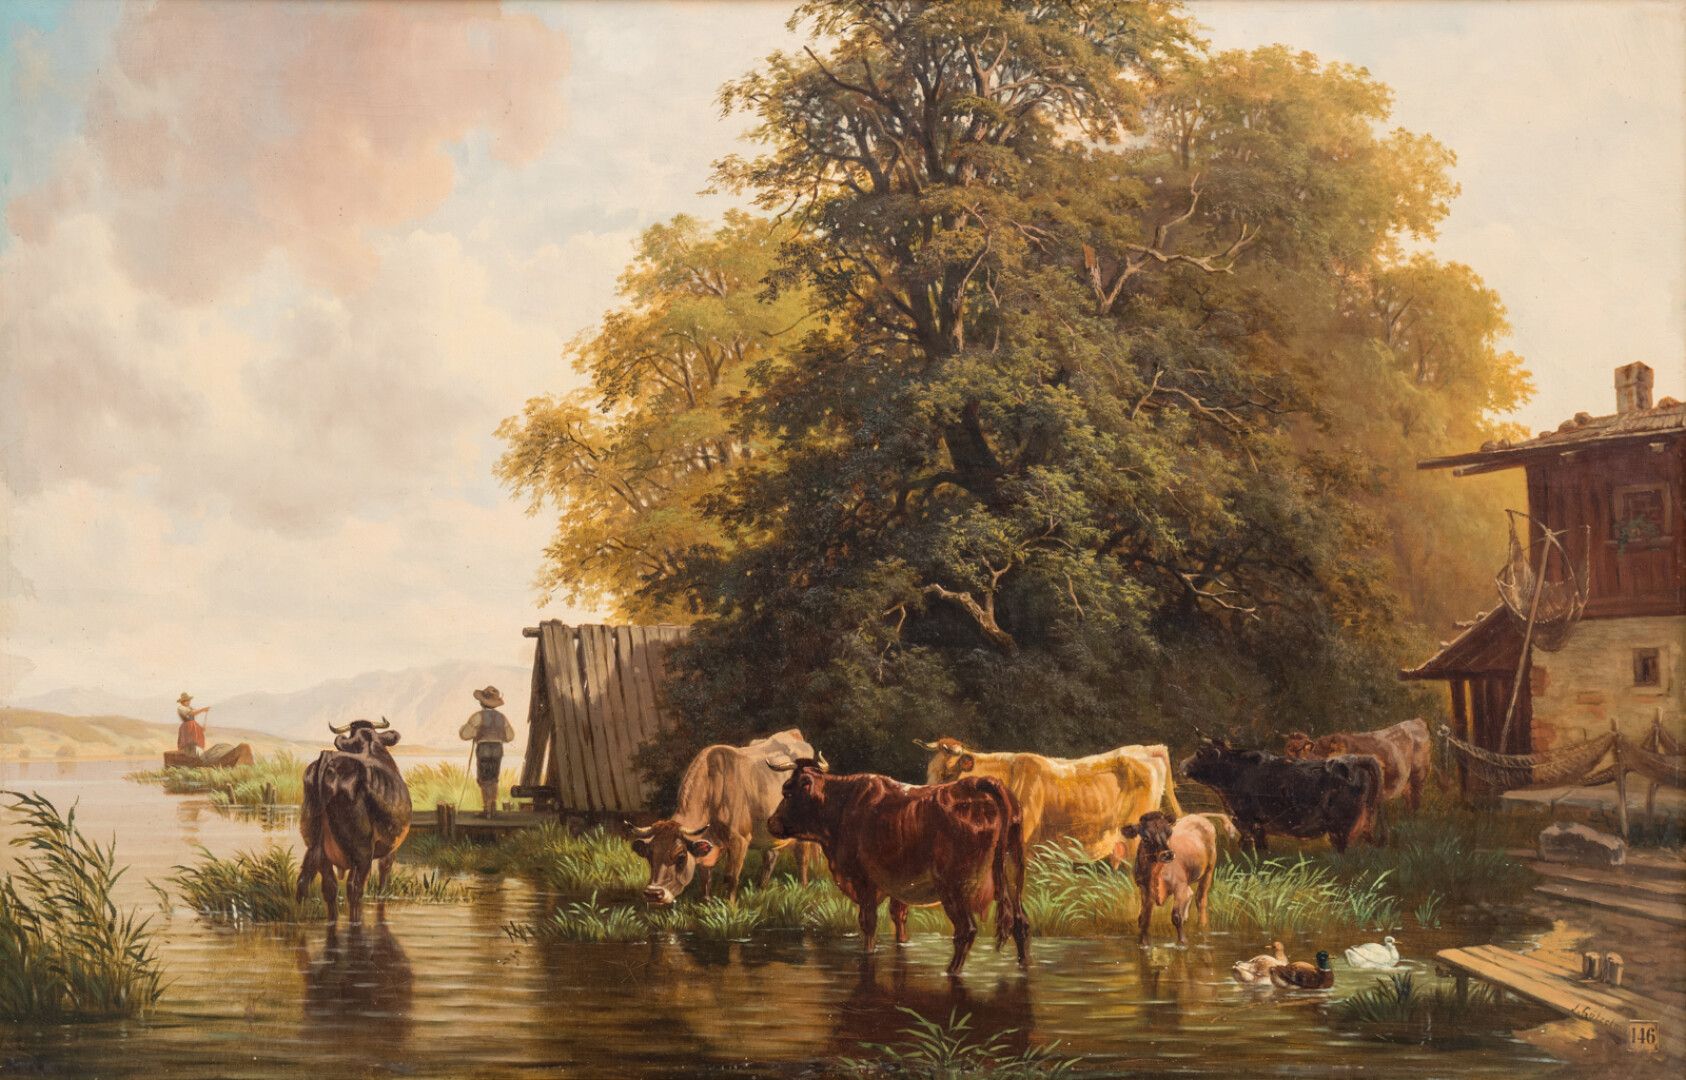 Null 爱德华-戈泽尔曼(Eduard GÖTZELMANN) (1830-1903)

有牛的生动景观

布面油画，右下角有签名

68 x 106 cm